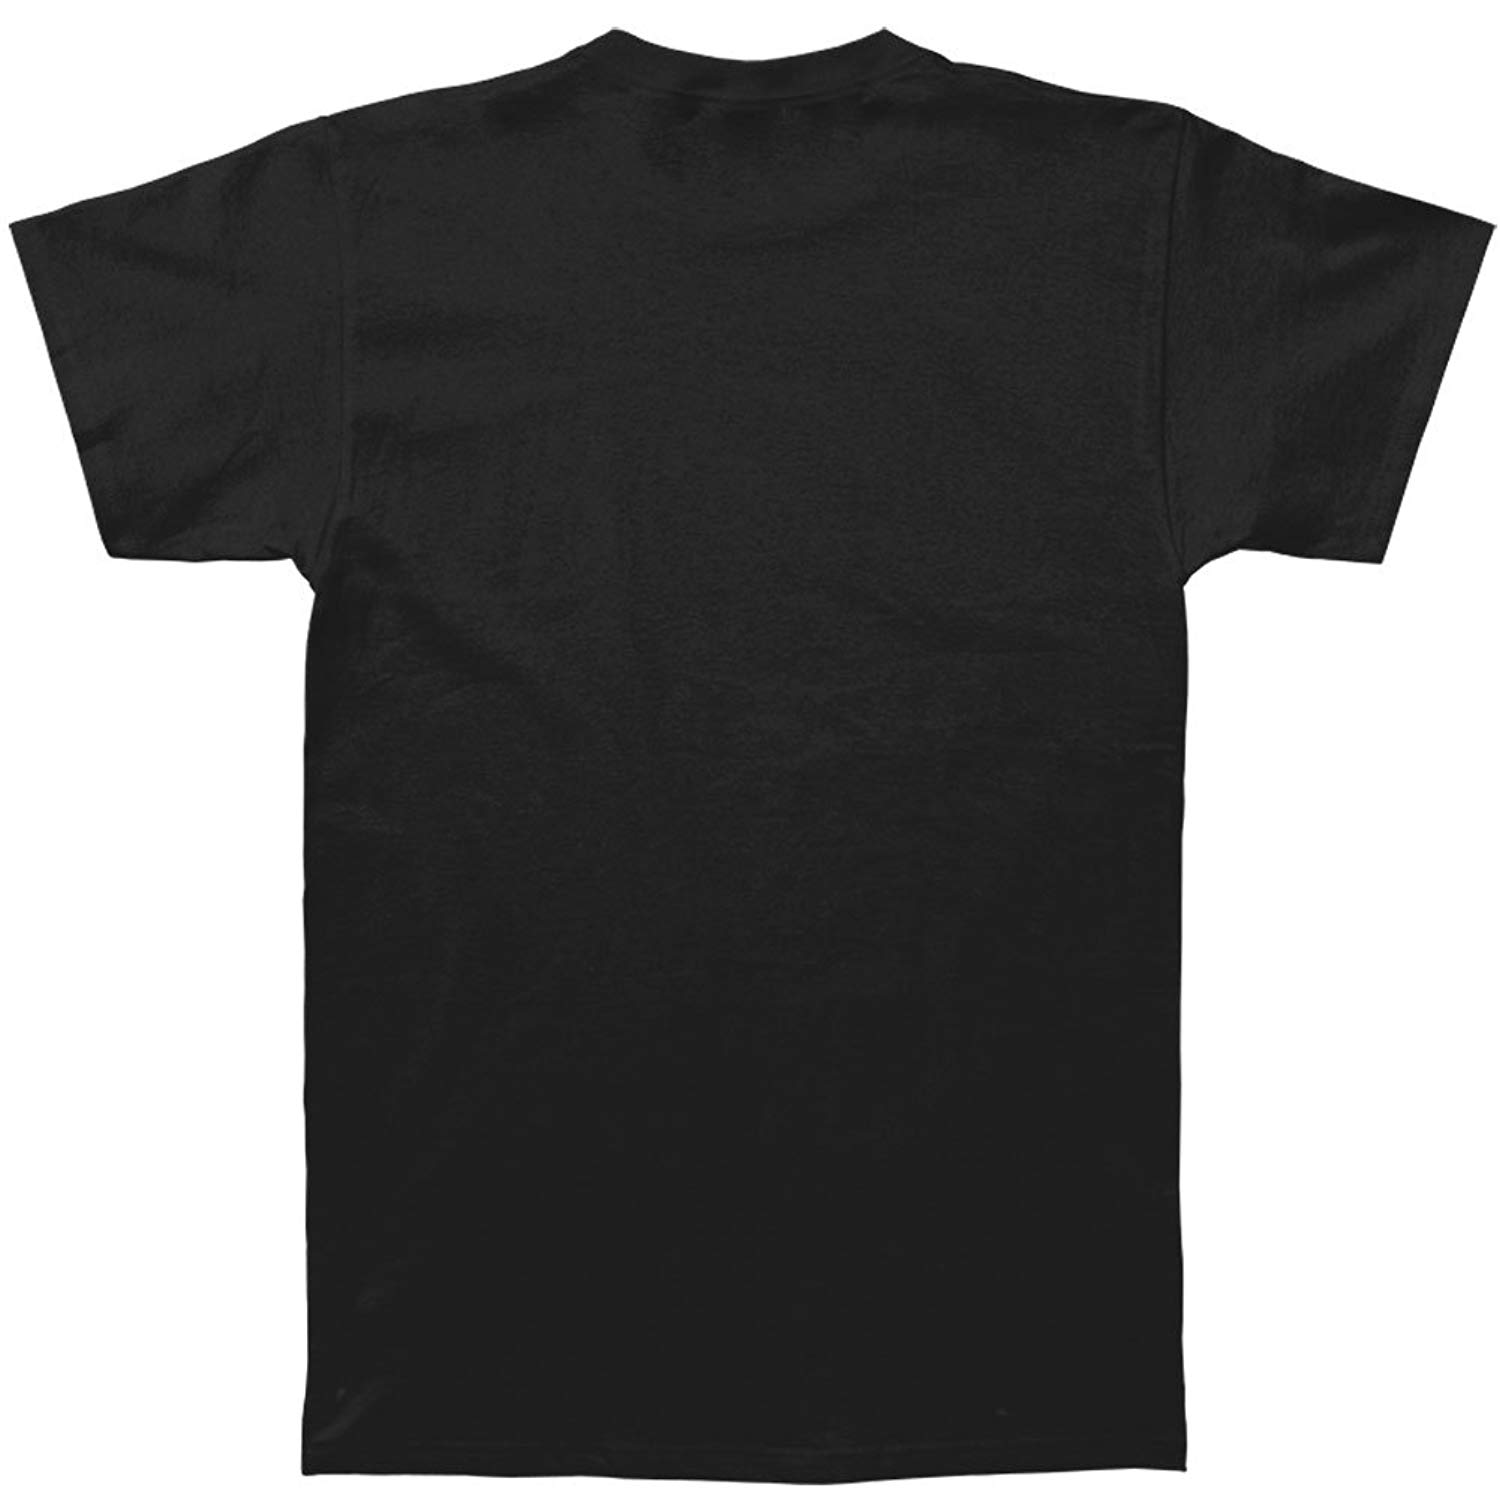 Black Shirts amazon.com: pantera menu0027s domination distressed t-shirt black: clothing FVAZOFU